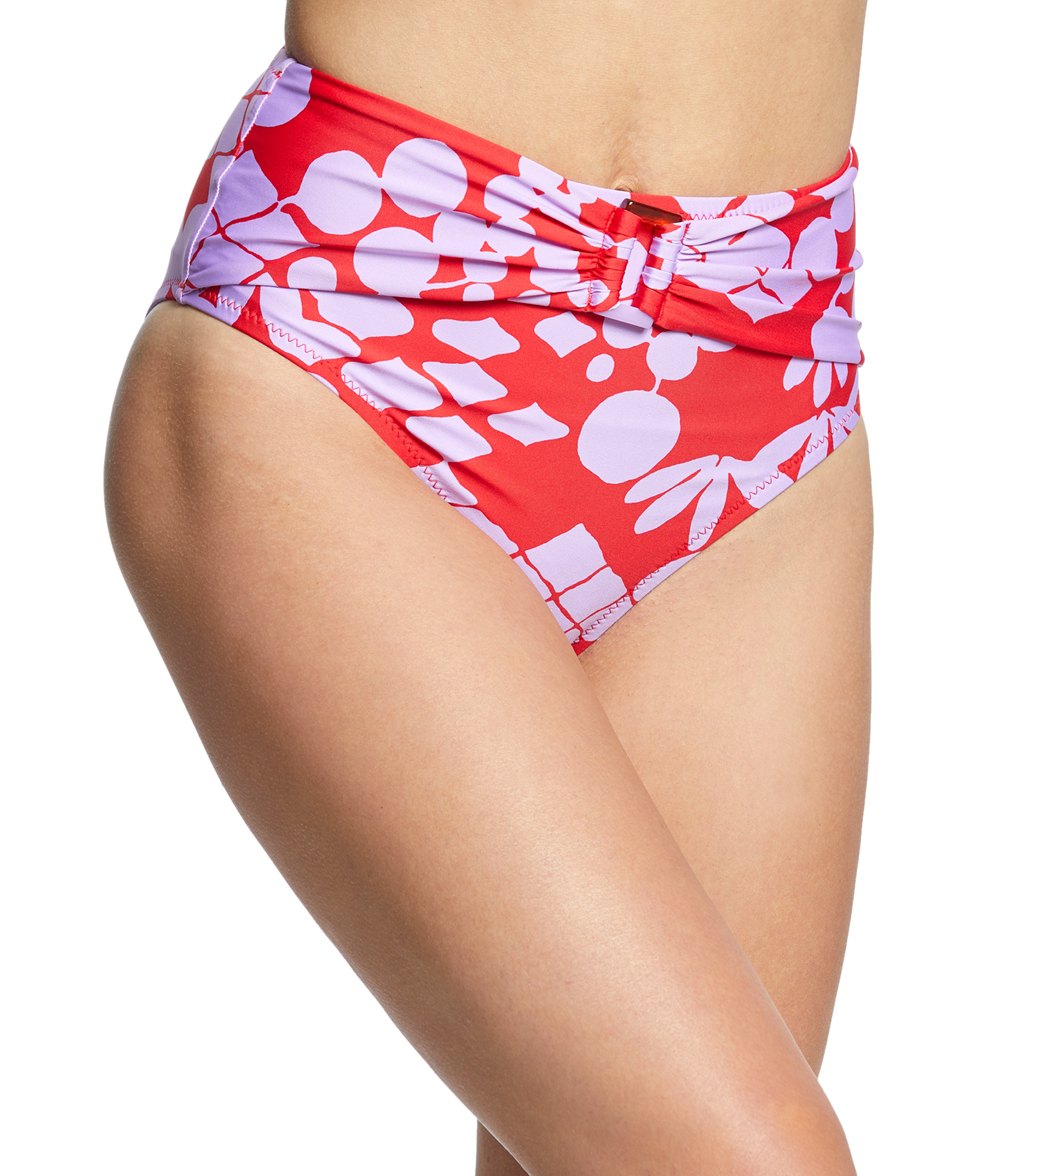 Trina Turk Bali Blossoms High Waisted Bikini Bottom - Red 6 - Swimoutlet.com